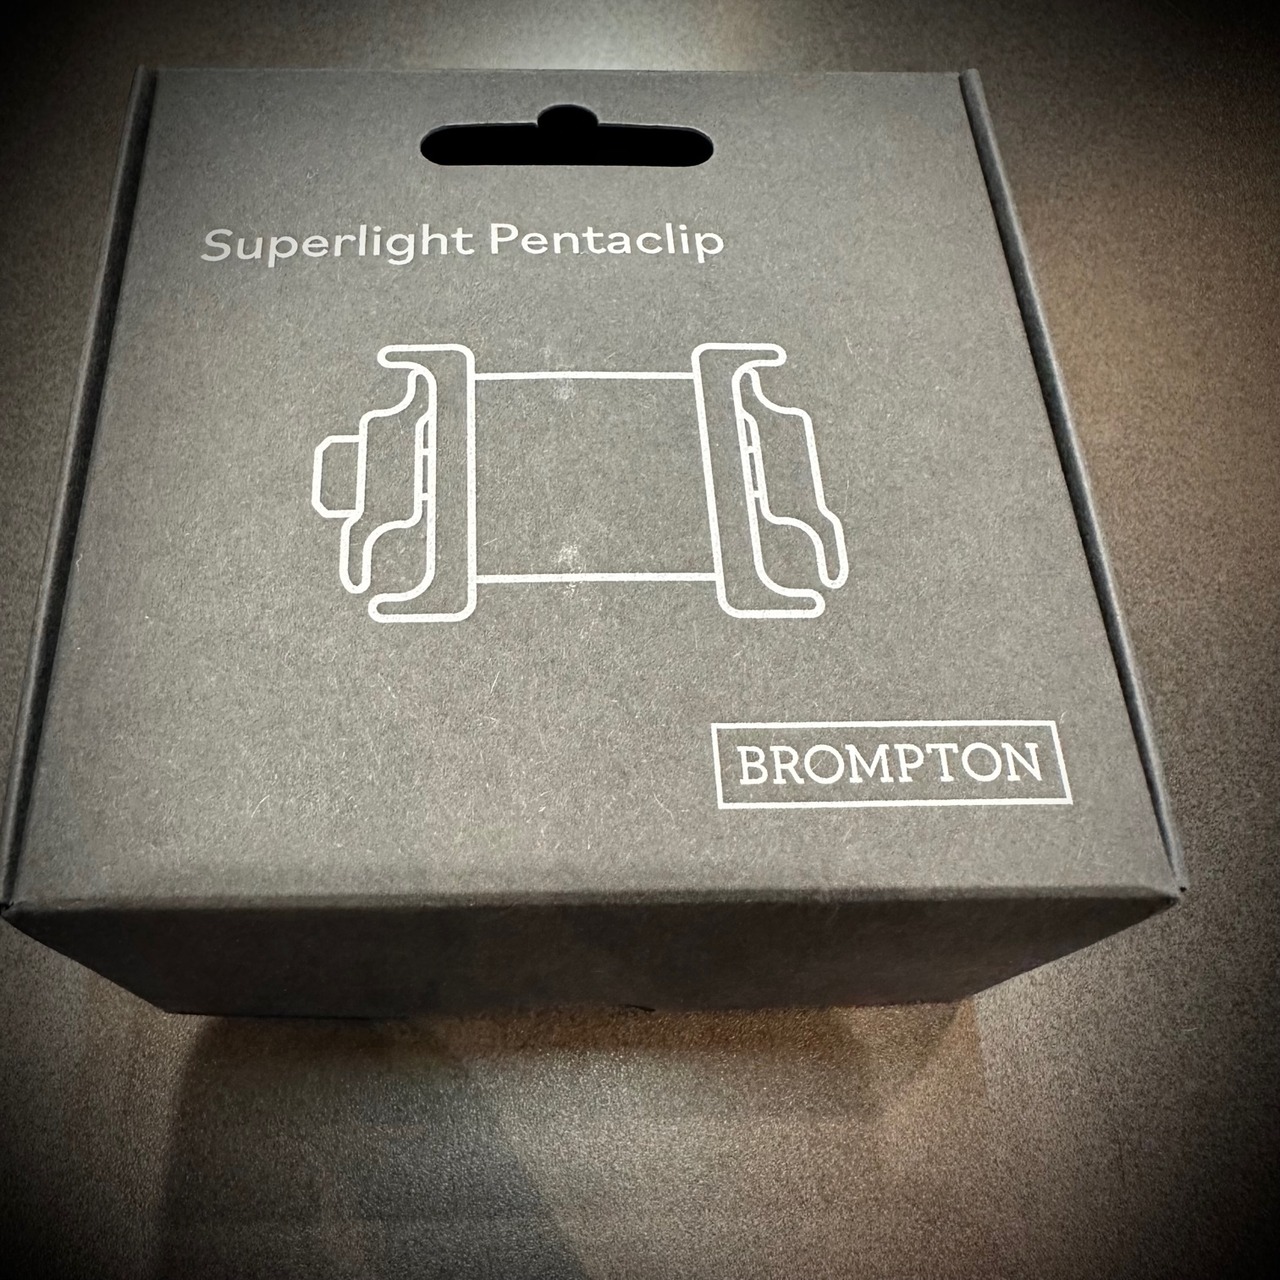 Brompton Superlight Pentaclip